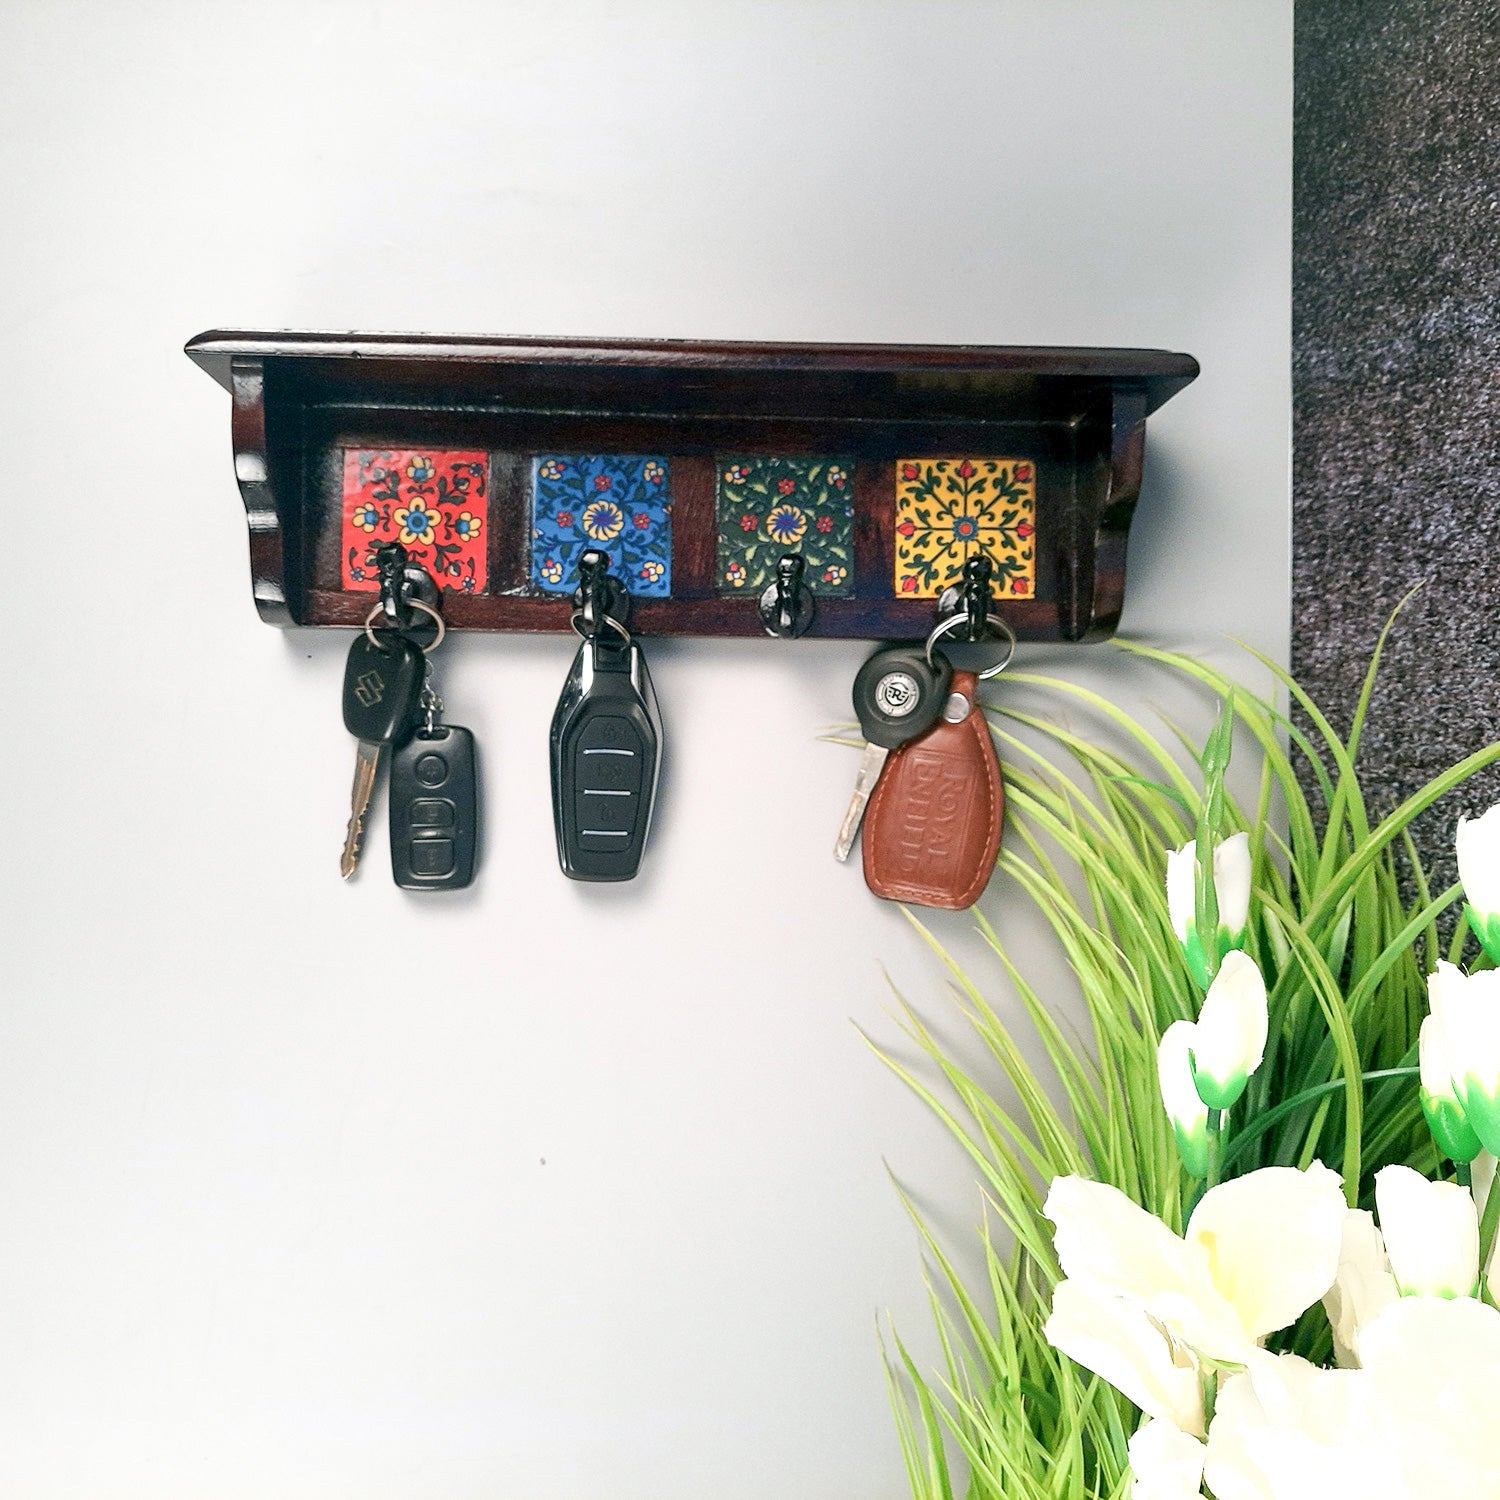 Wooden Shelf With Wall Key Hooks - Wall Mount | Floating Shelves For Decorating Showpieces, Vases, Candle Holders & Books | Key Holder Organiser - Home, Entrance, Office Decor & Gifts - Set of 2 - Apkamart